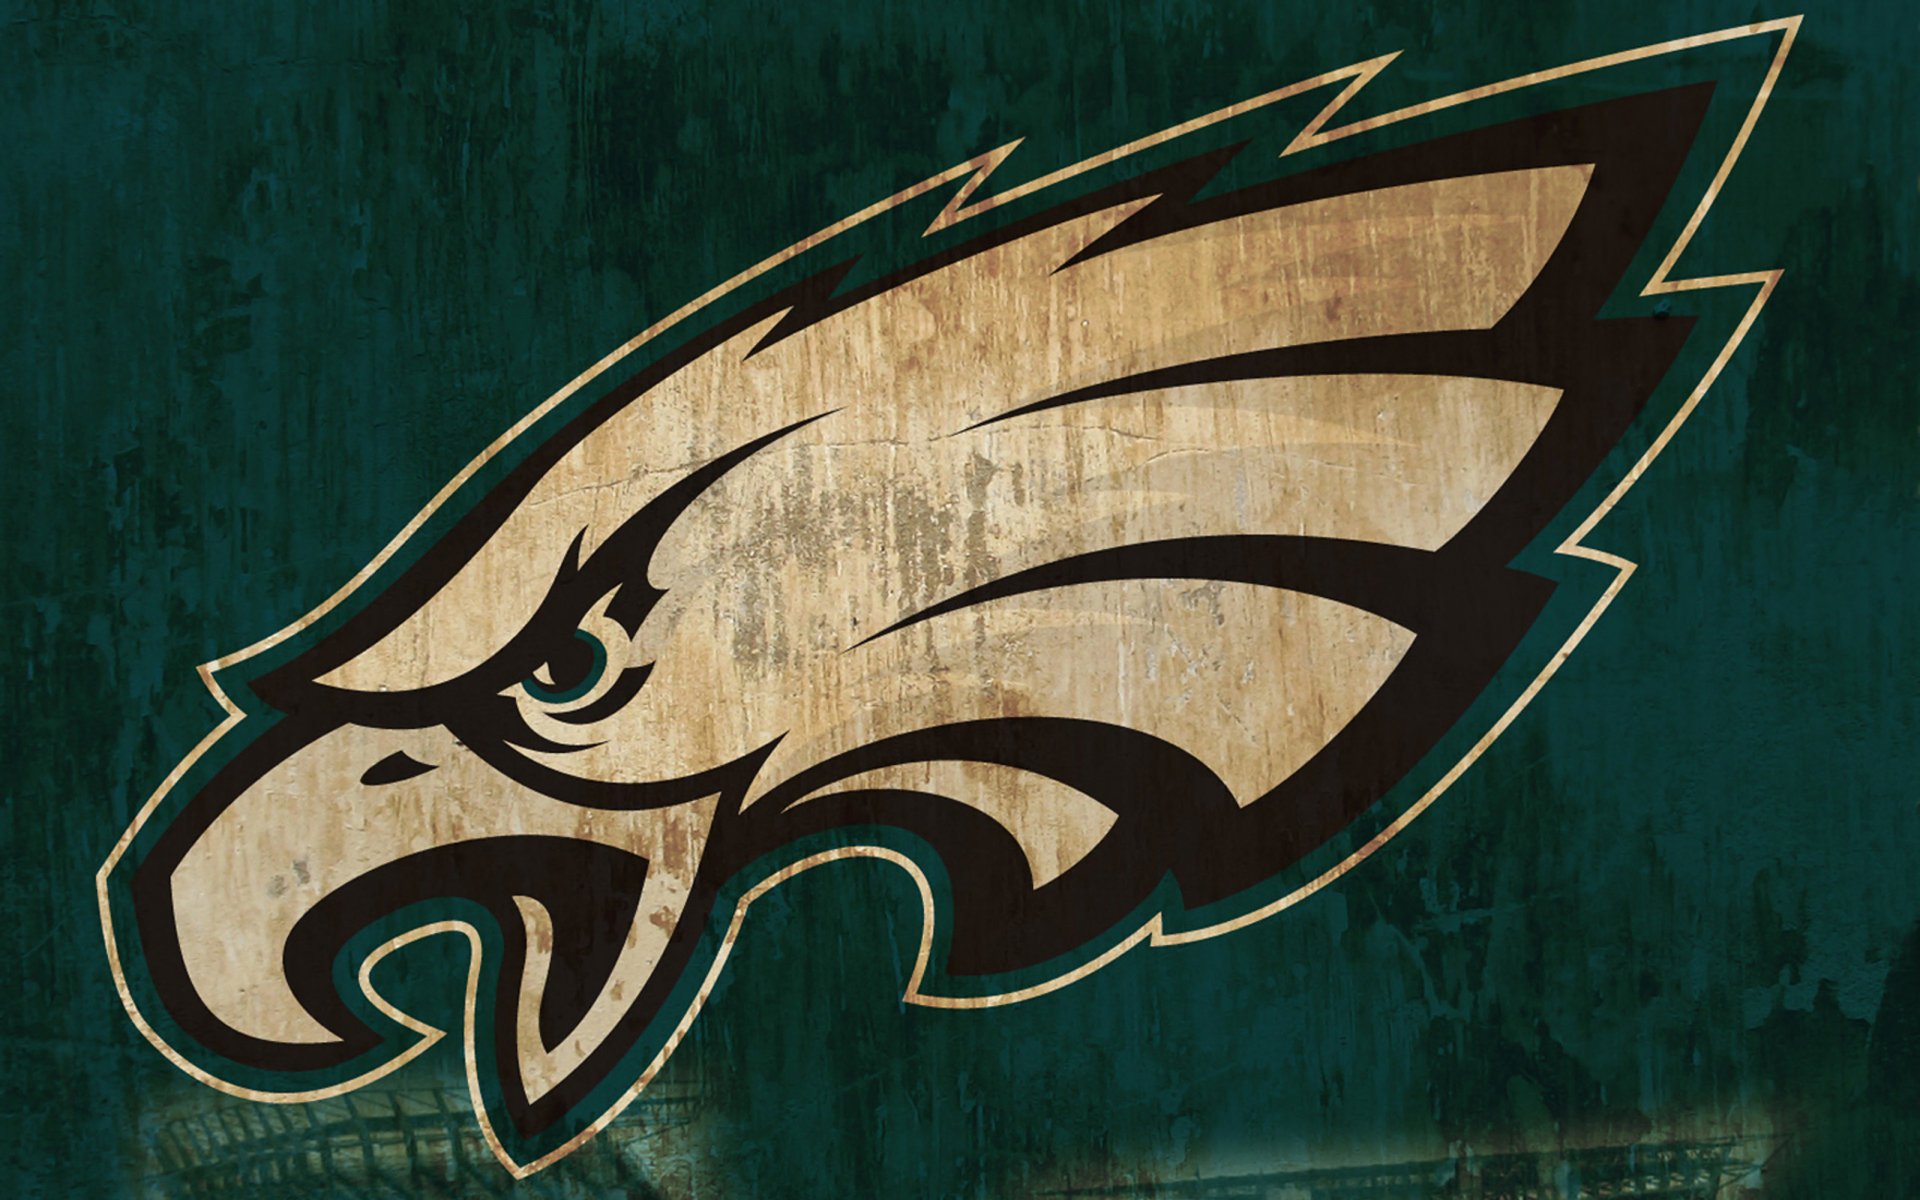 Philadelphia Eagles Full HD Wallpaper and Background Image | 2560x1600